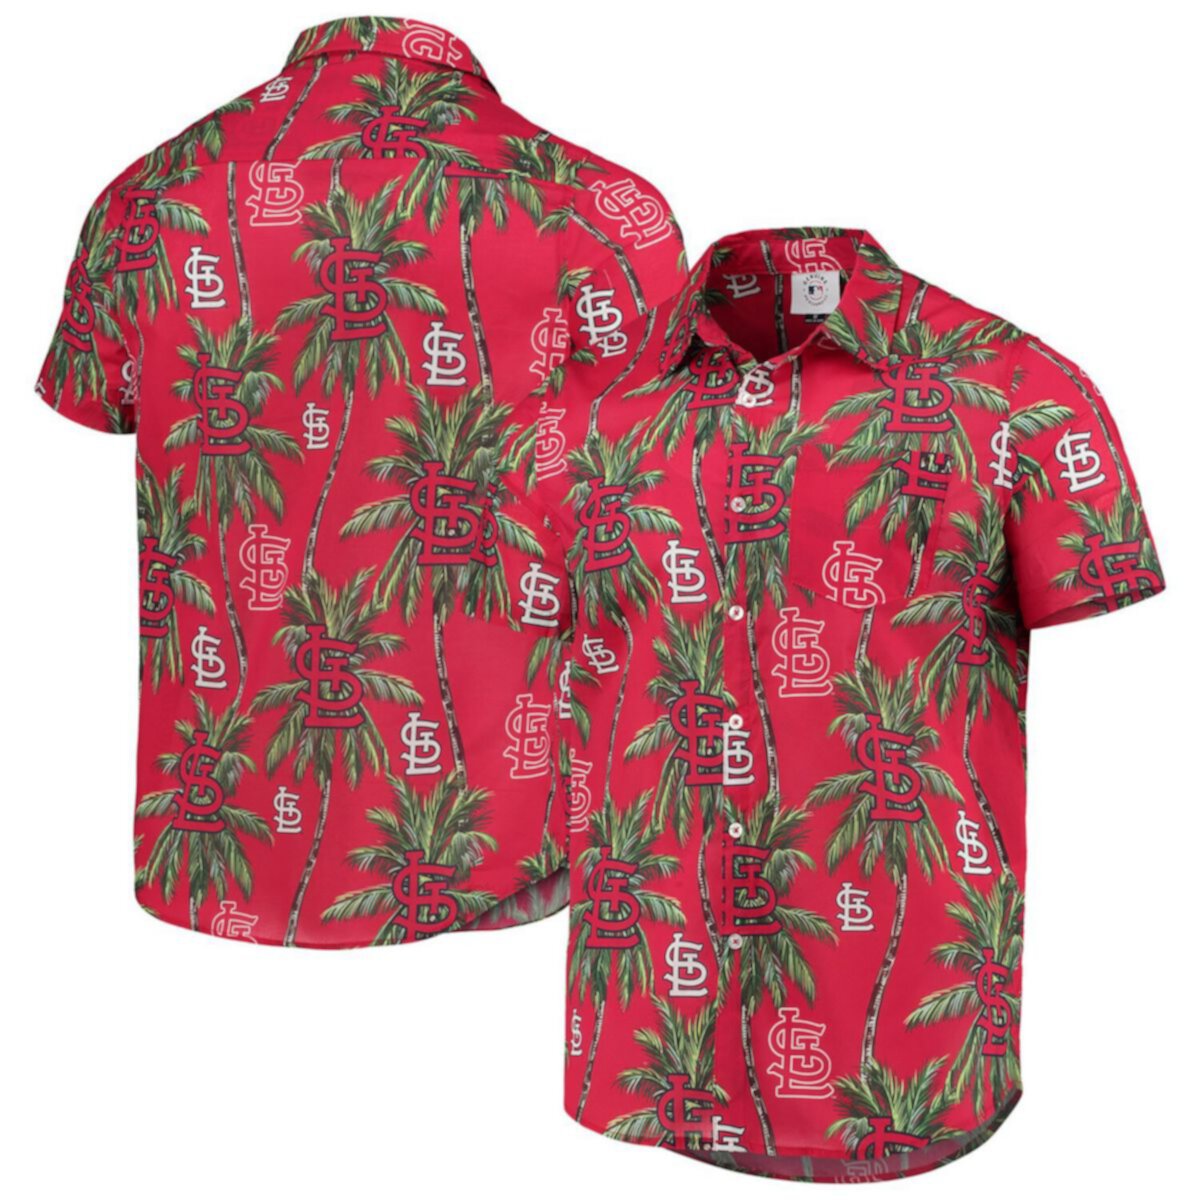 red button shirt zara palm tree